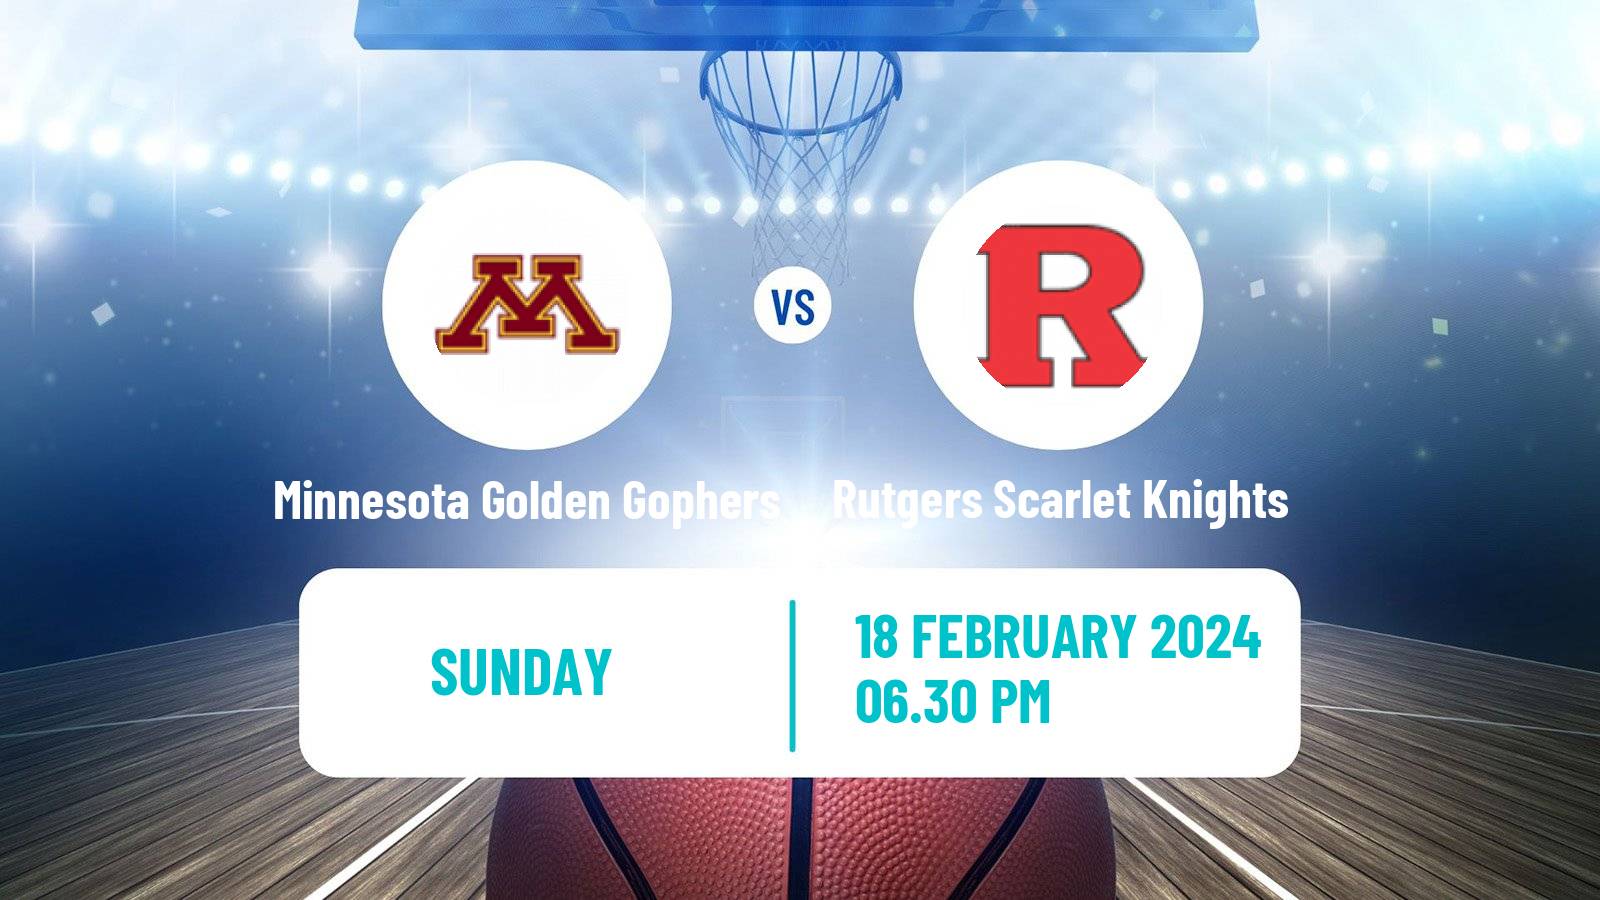 Basketball NCAA College Basketball Minnesota Golden Gophers - Rutgers Scarlet Knights